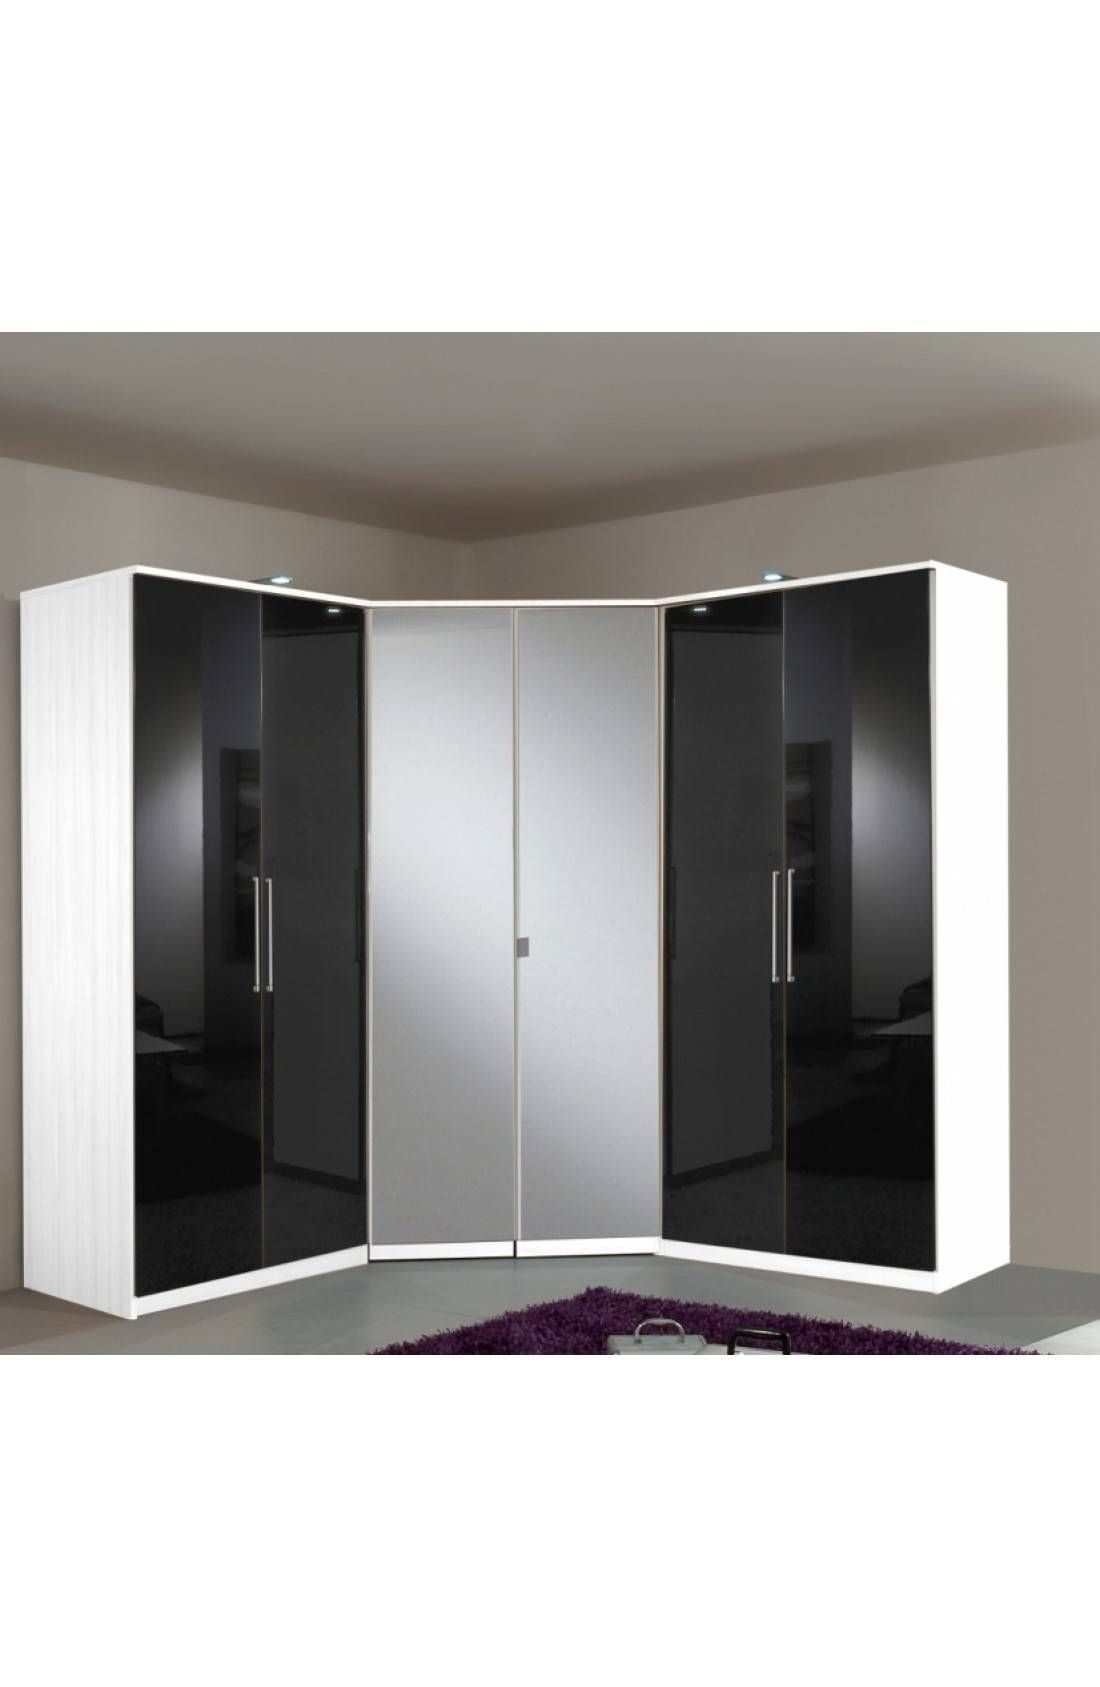 Slumberhaus 'gamma' 6 Door Corner Wardrobe Fitment With White With Regard To Black Corner Wardrobes (Photo 5 of 15)